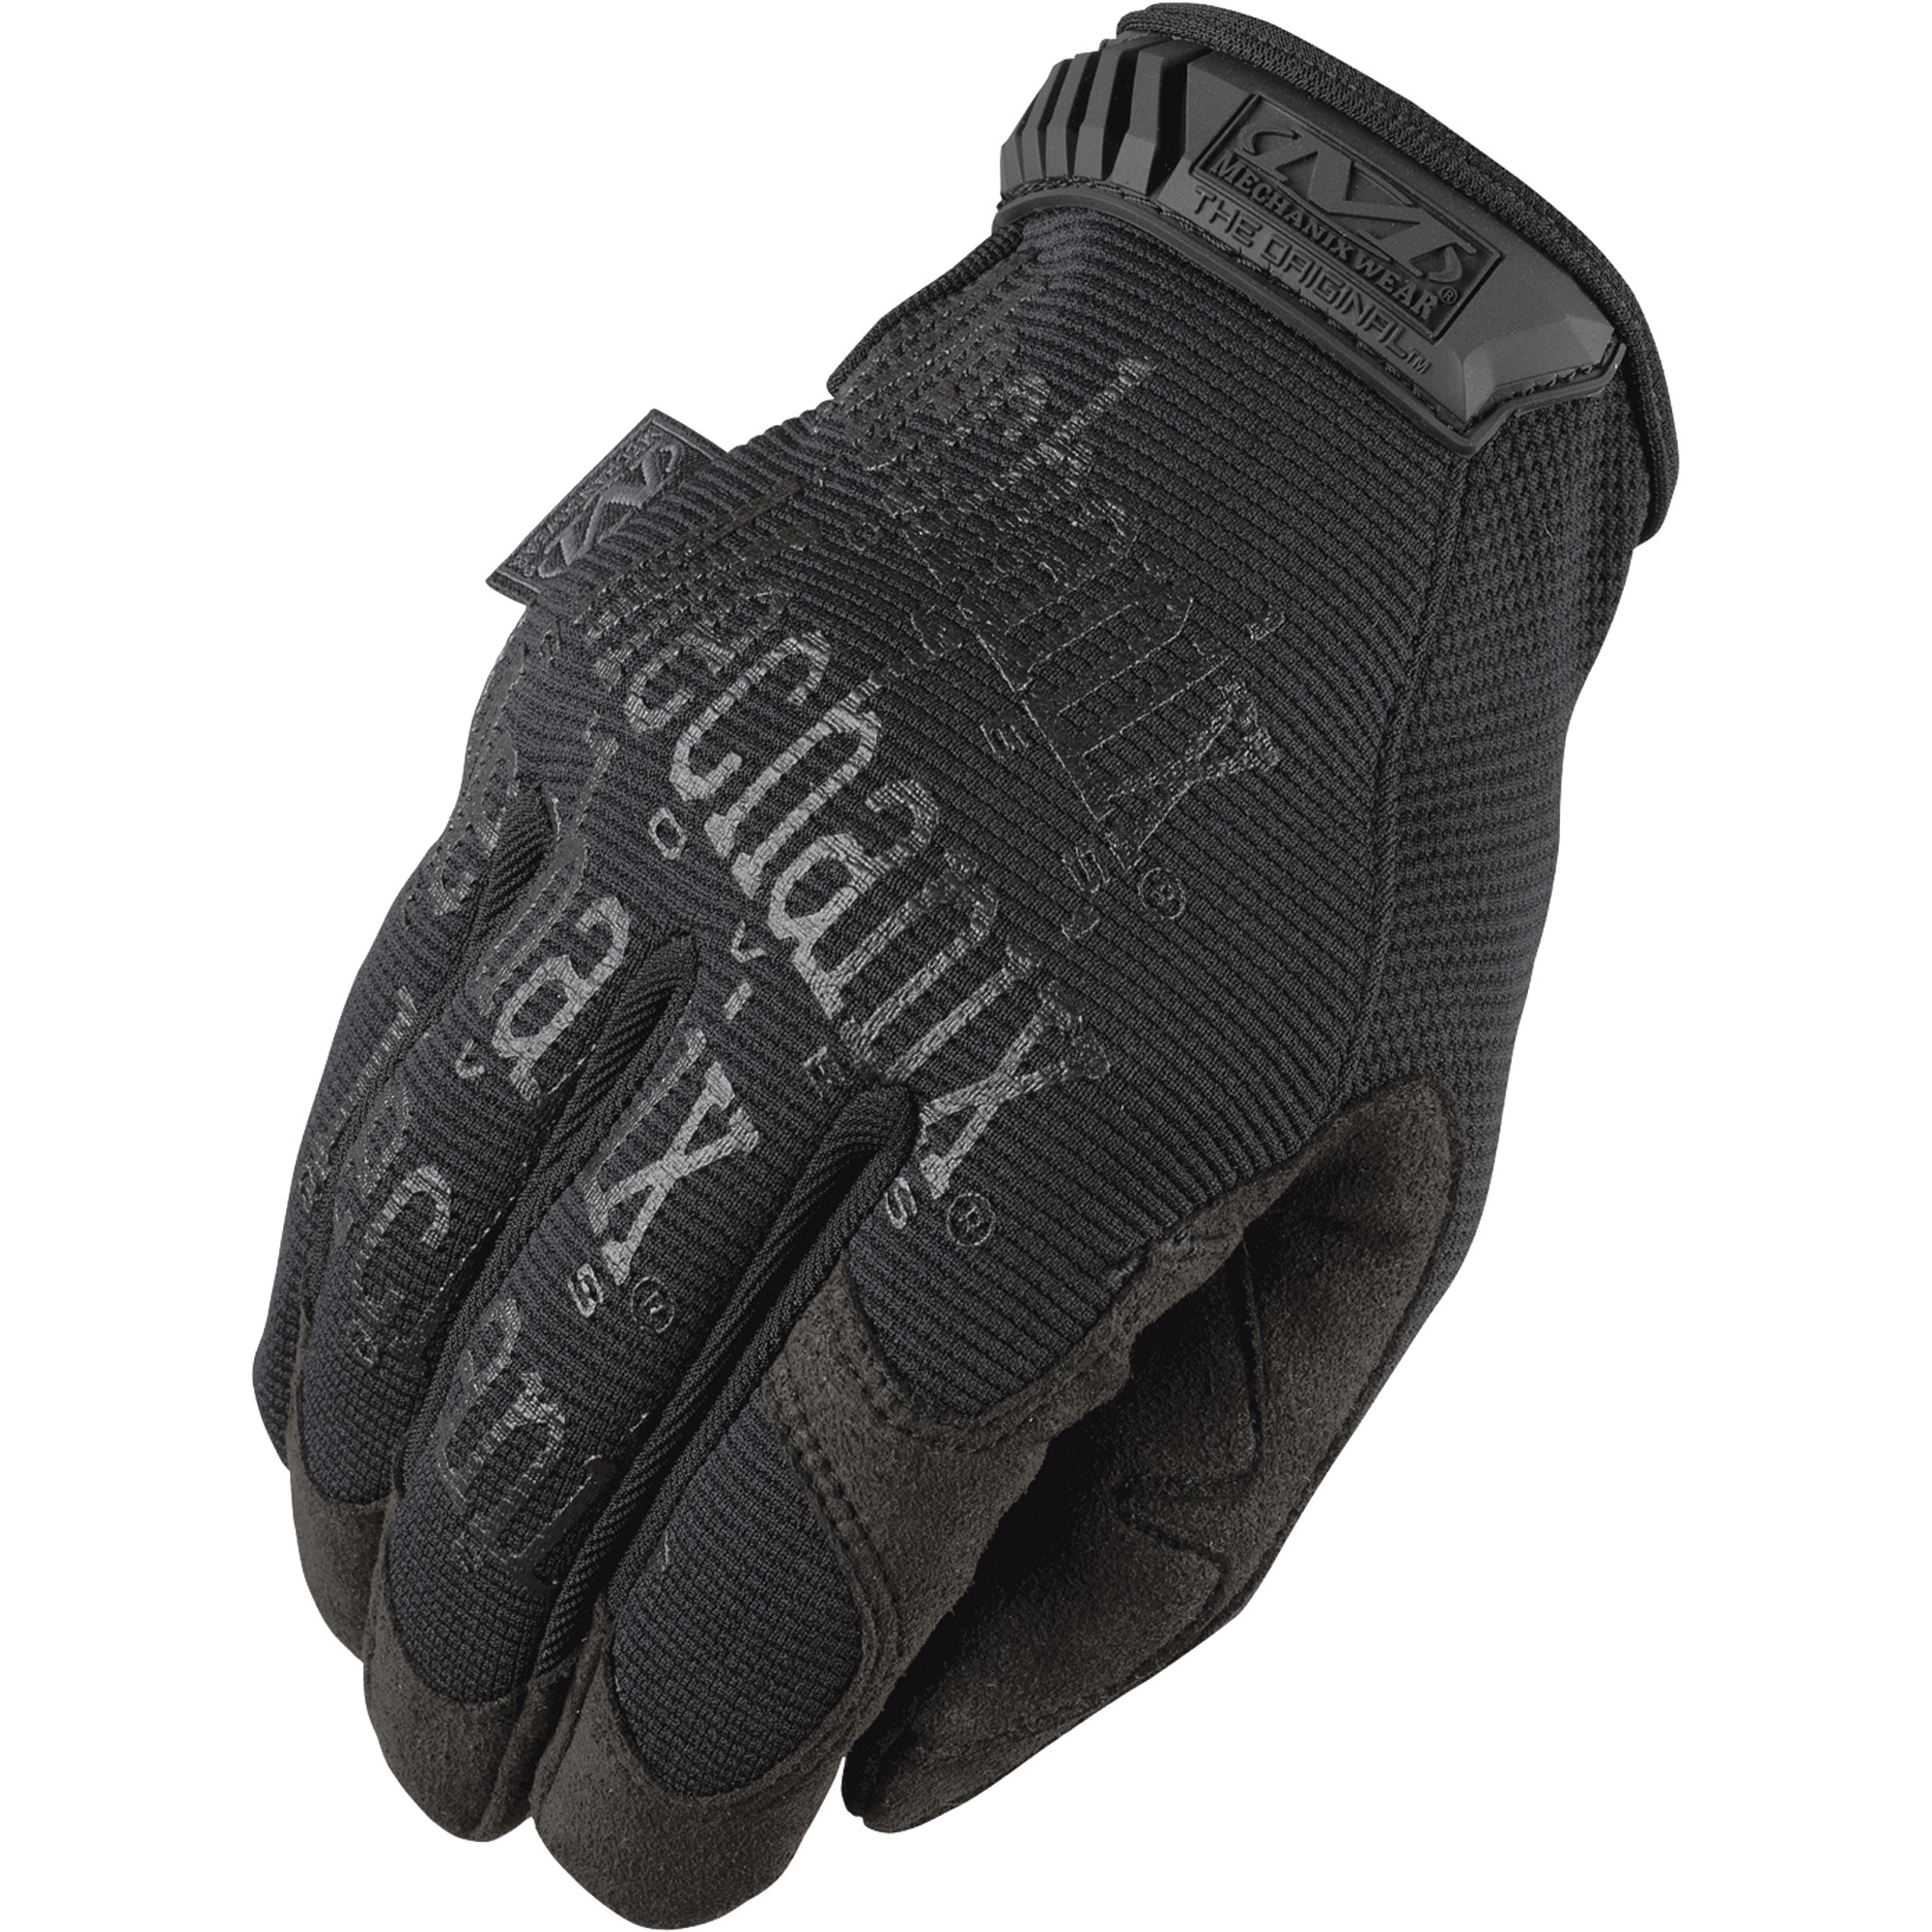 Mechanix Men's Wear Original Gloves - Covert, X-Large, Model MG-55-011